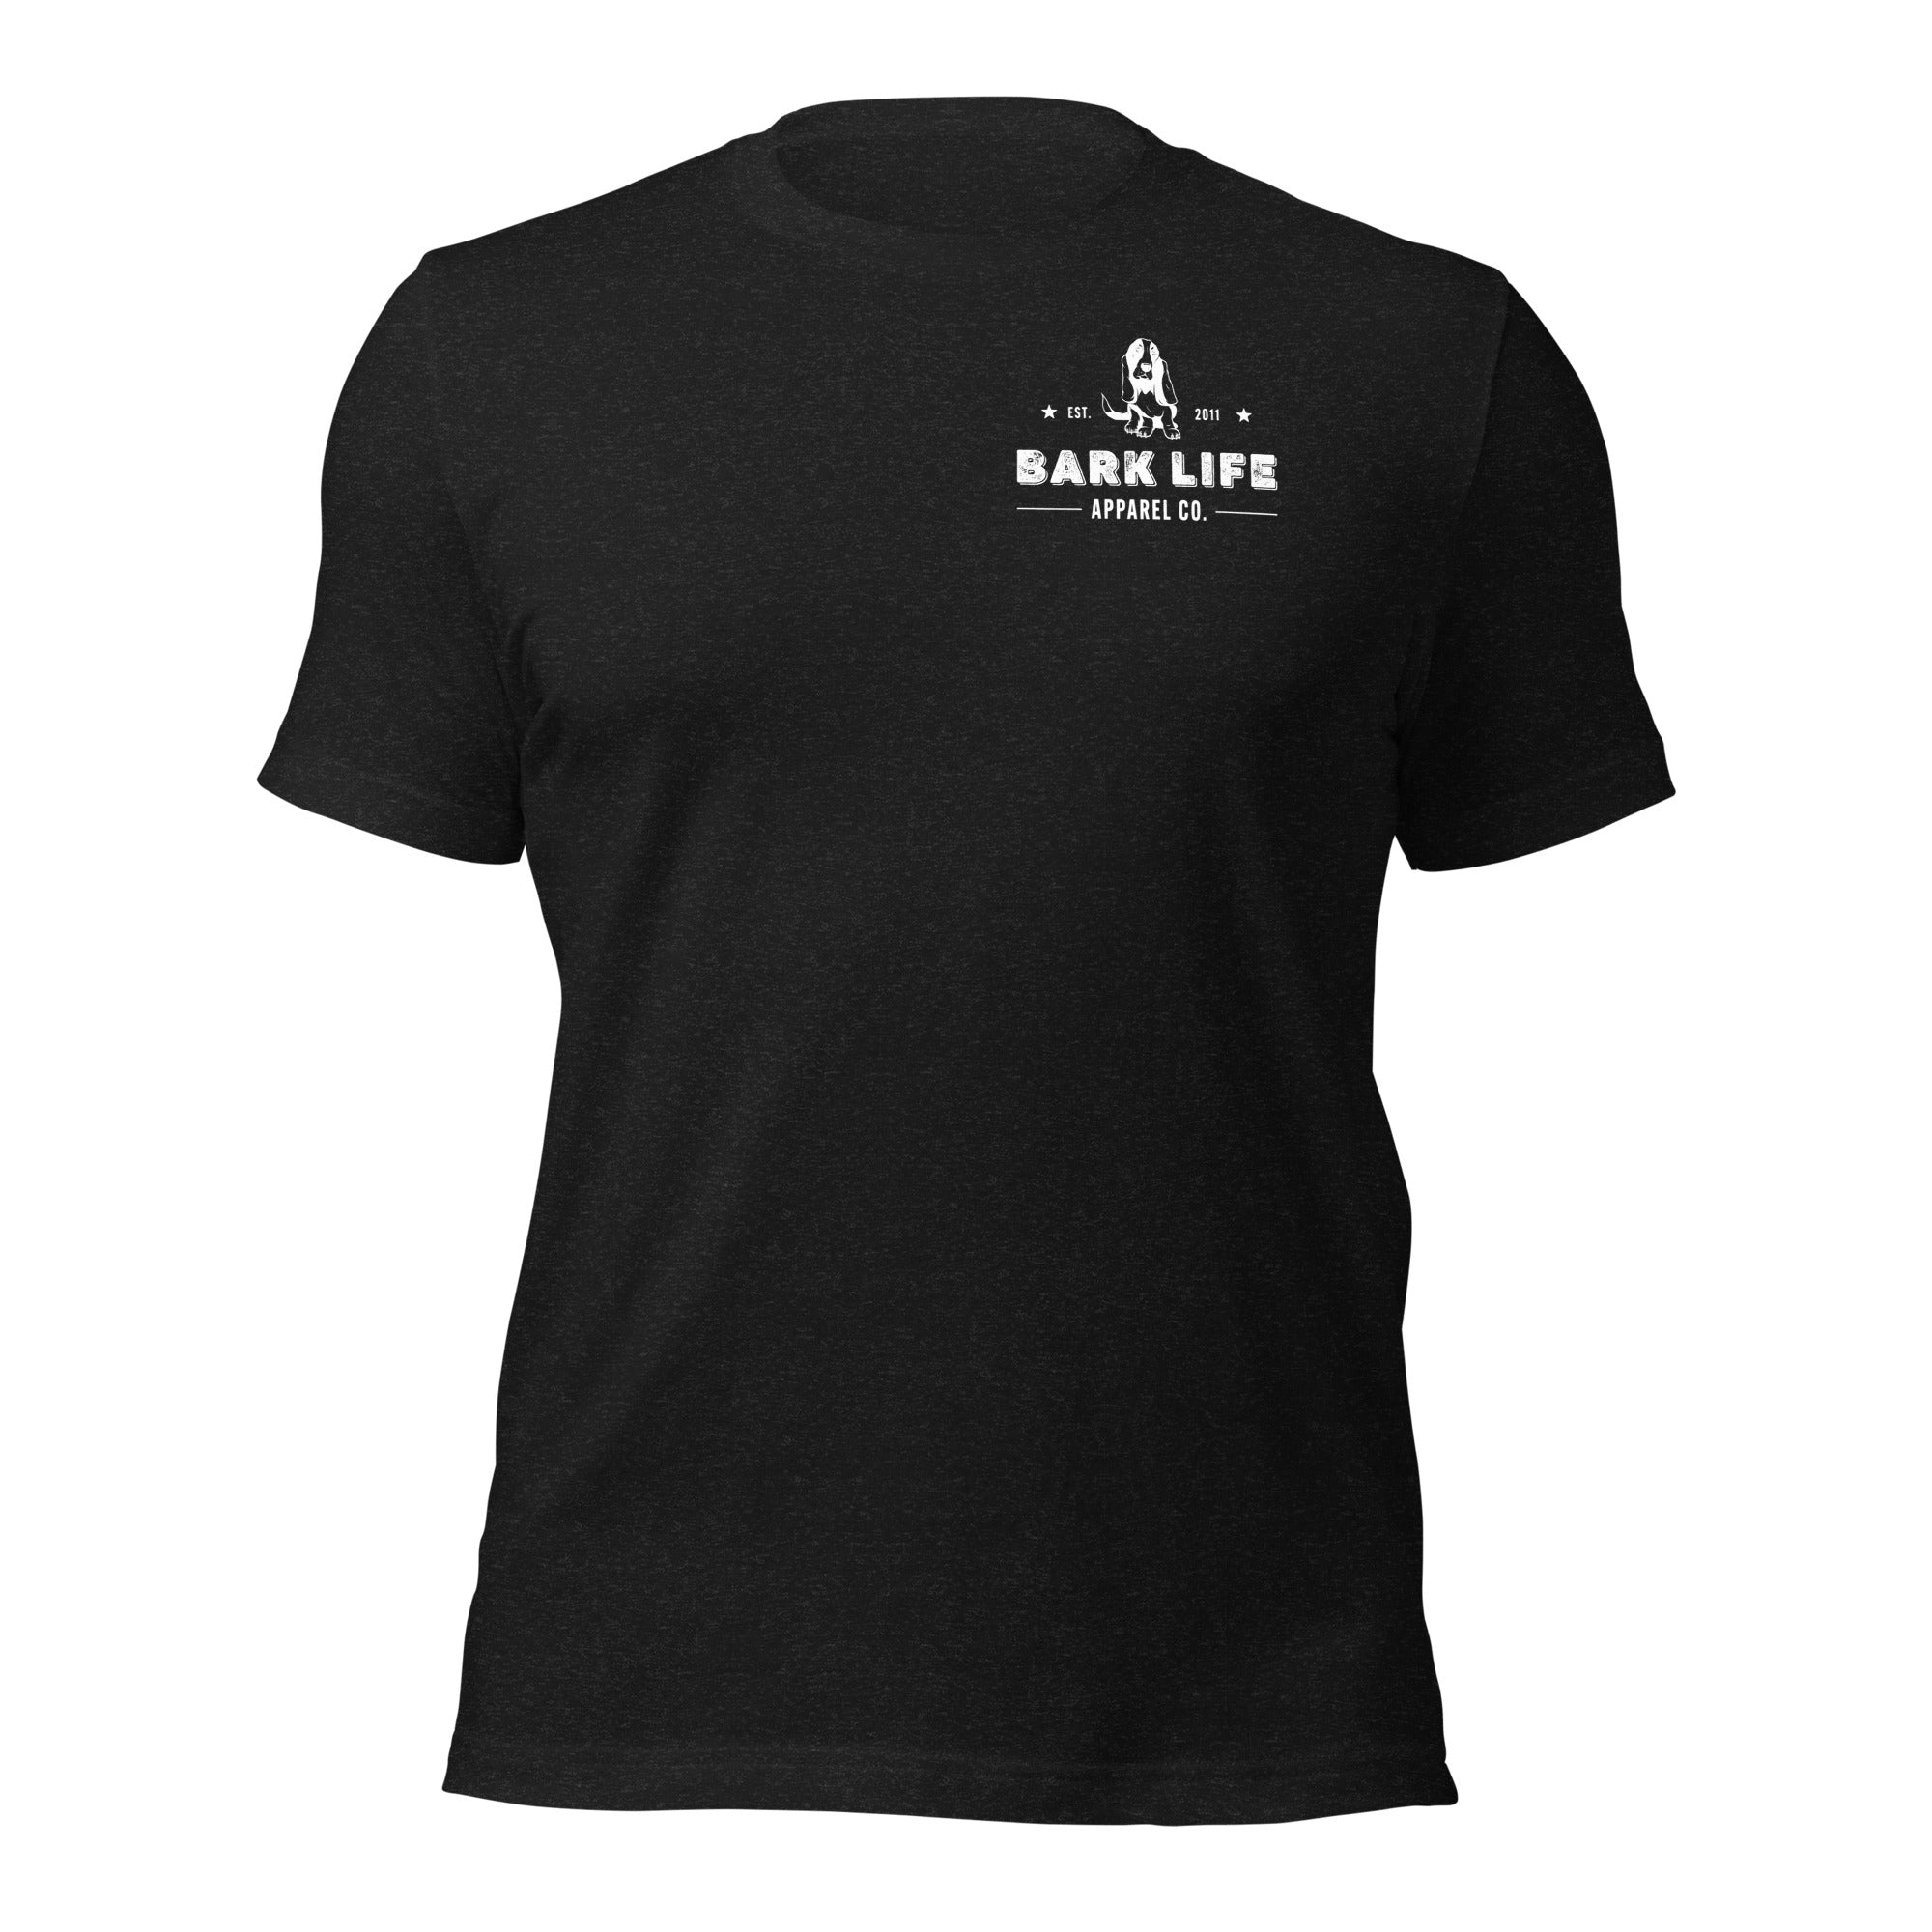 Basset Hound - Short Sleeve Cotton Tee  Shirt